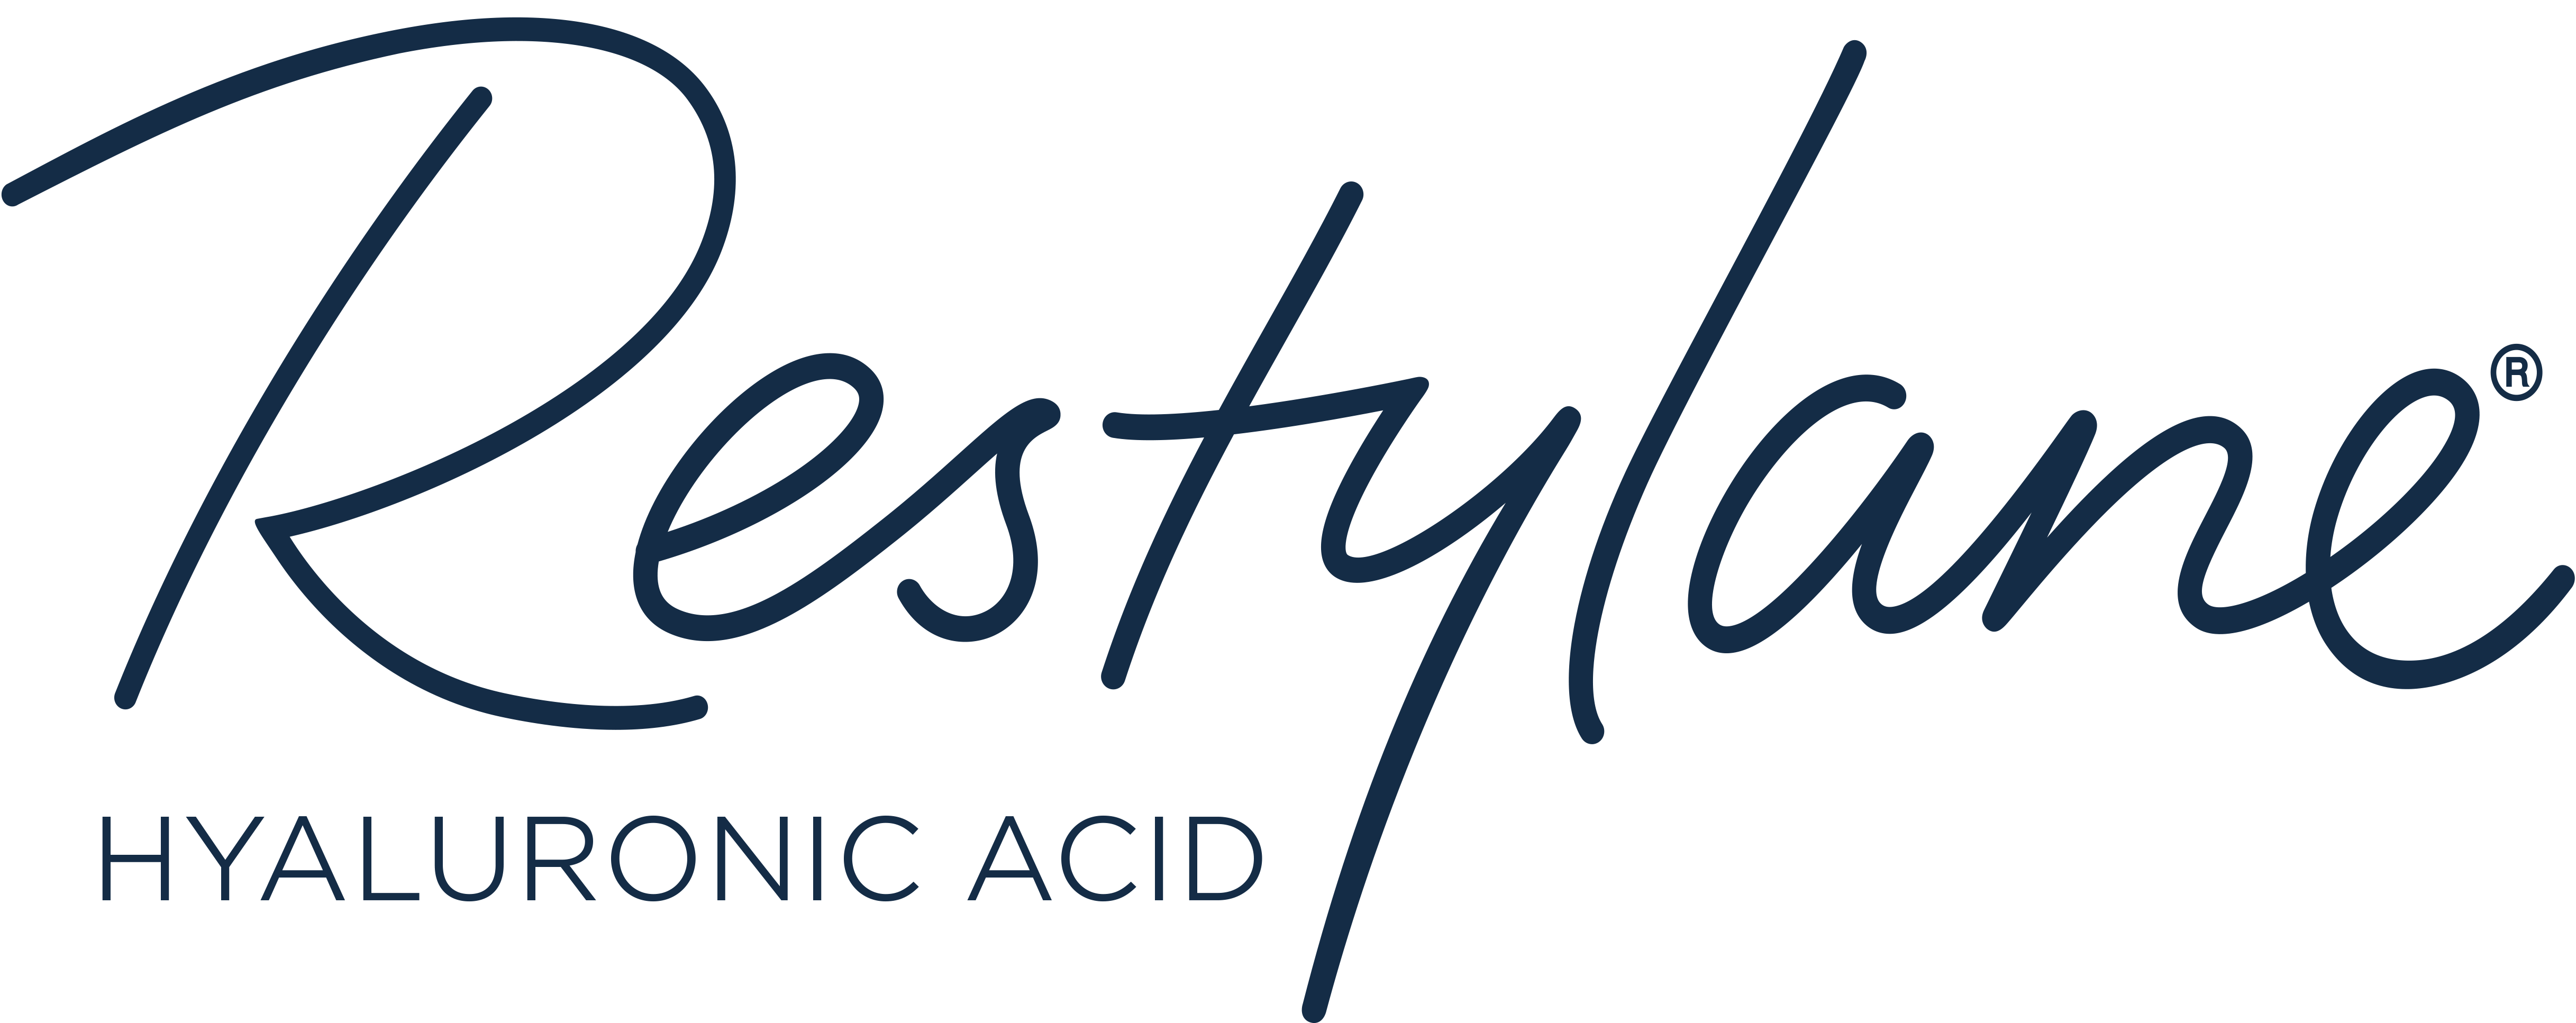 Restylane new HA logo